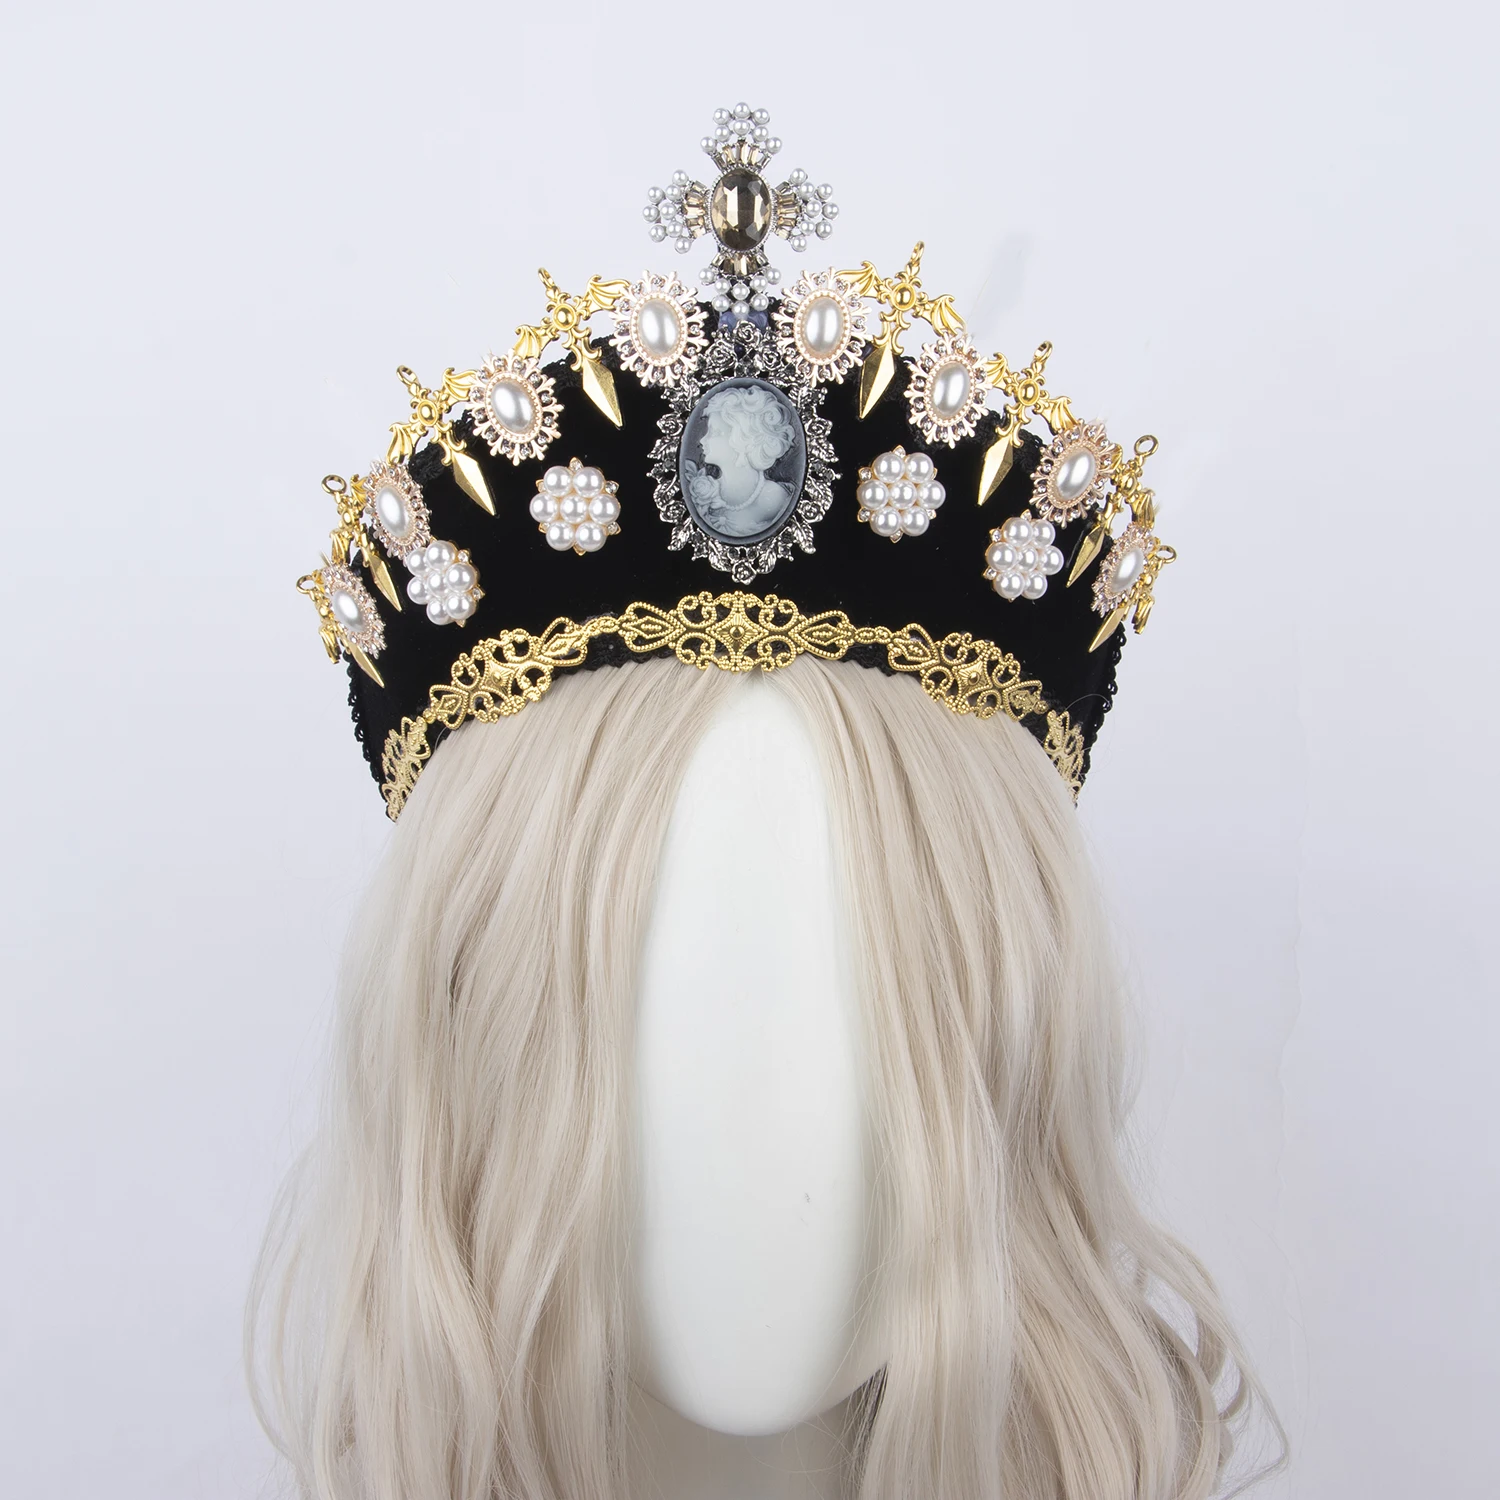 Handmake Gothic Lolita Headband Hair Ornament Renaissance Palace Style Elizabethan Coronet Gorgeous Tudor Crown Hair Accessories